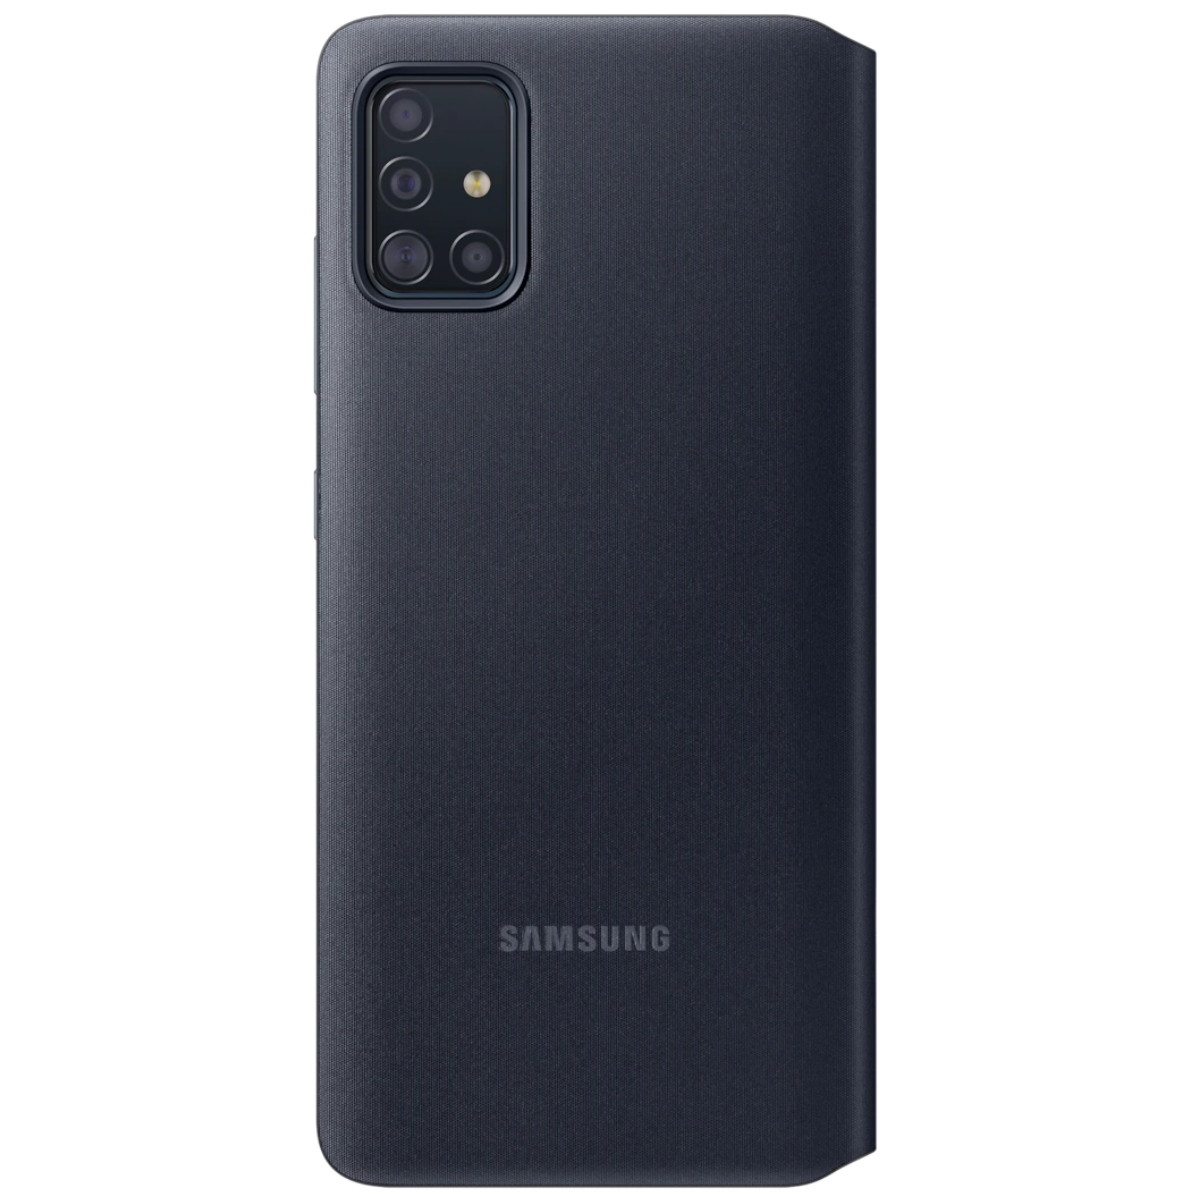 Husa Book S-View Led Samsung pentru Samsung Galaxy A71 Black thumb